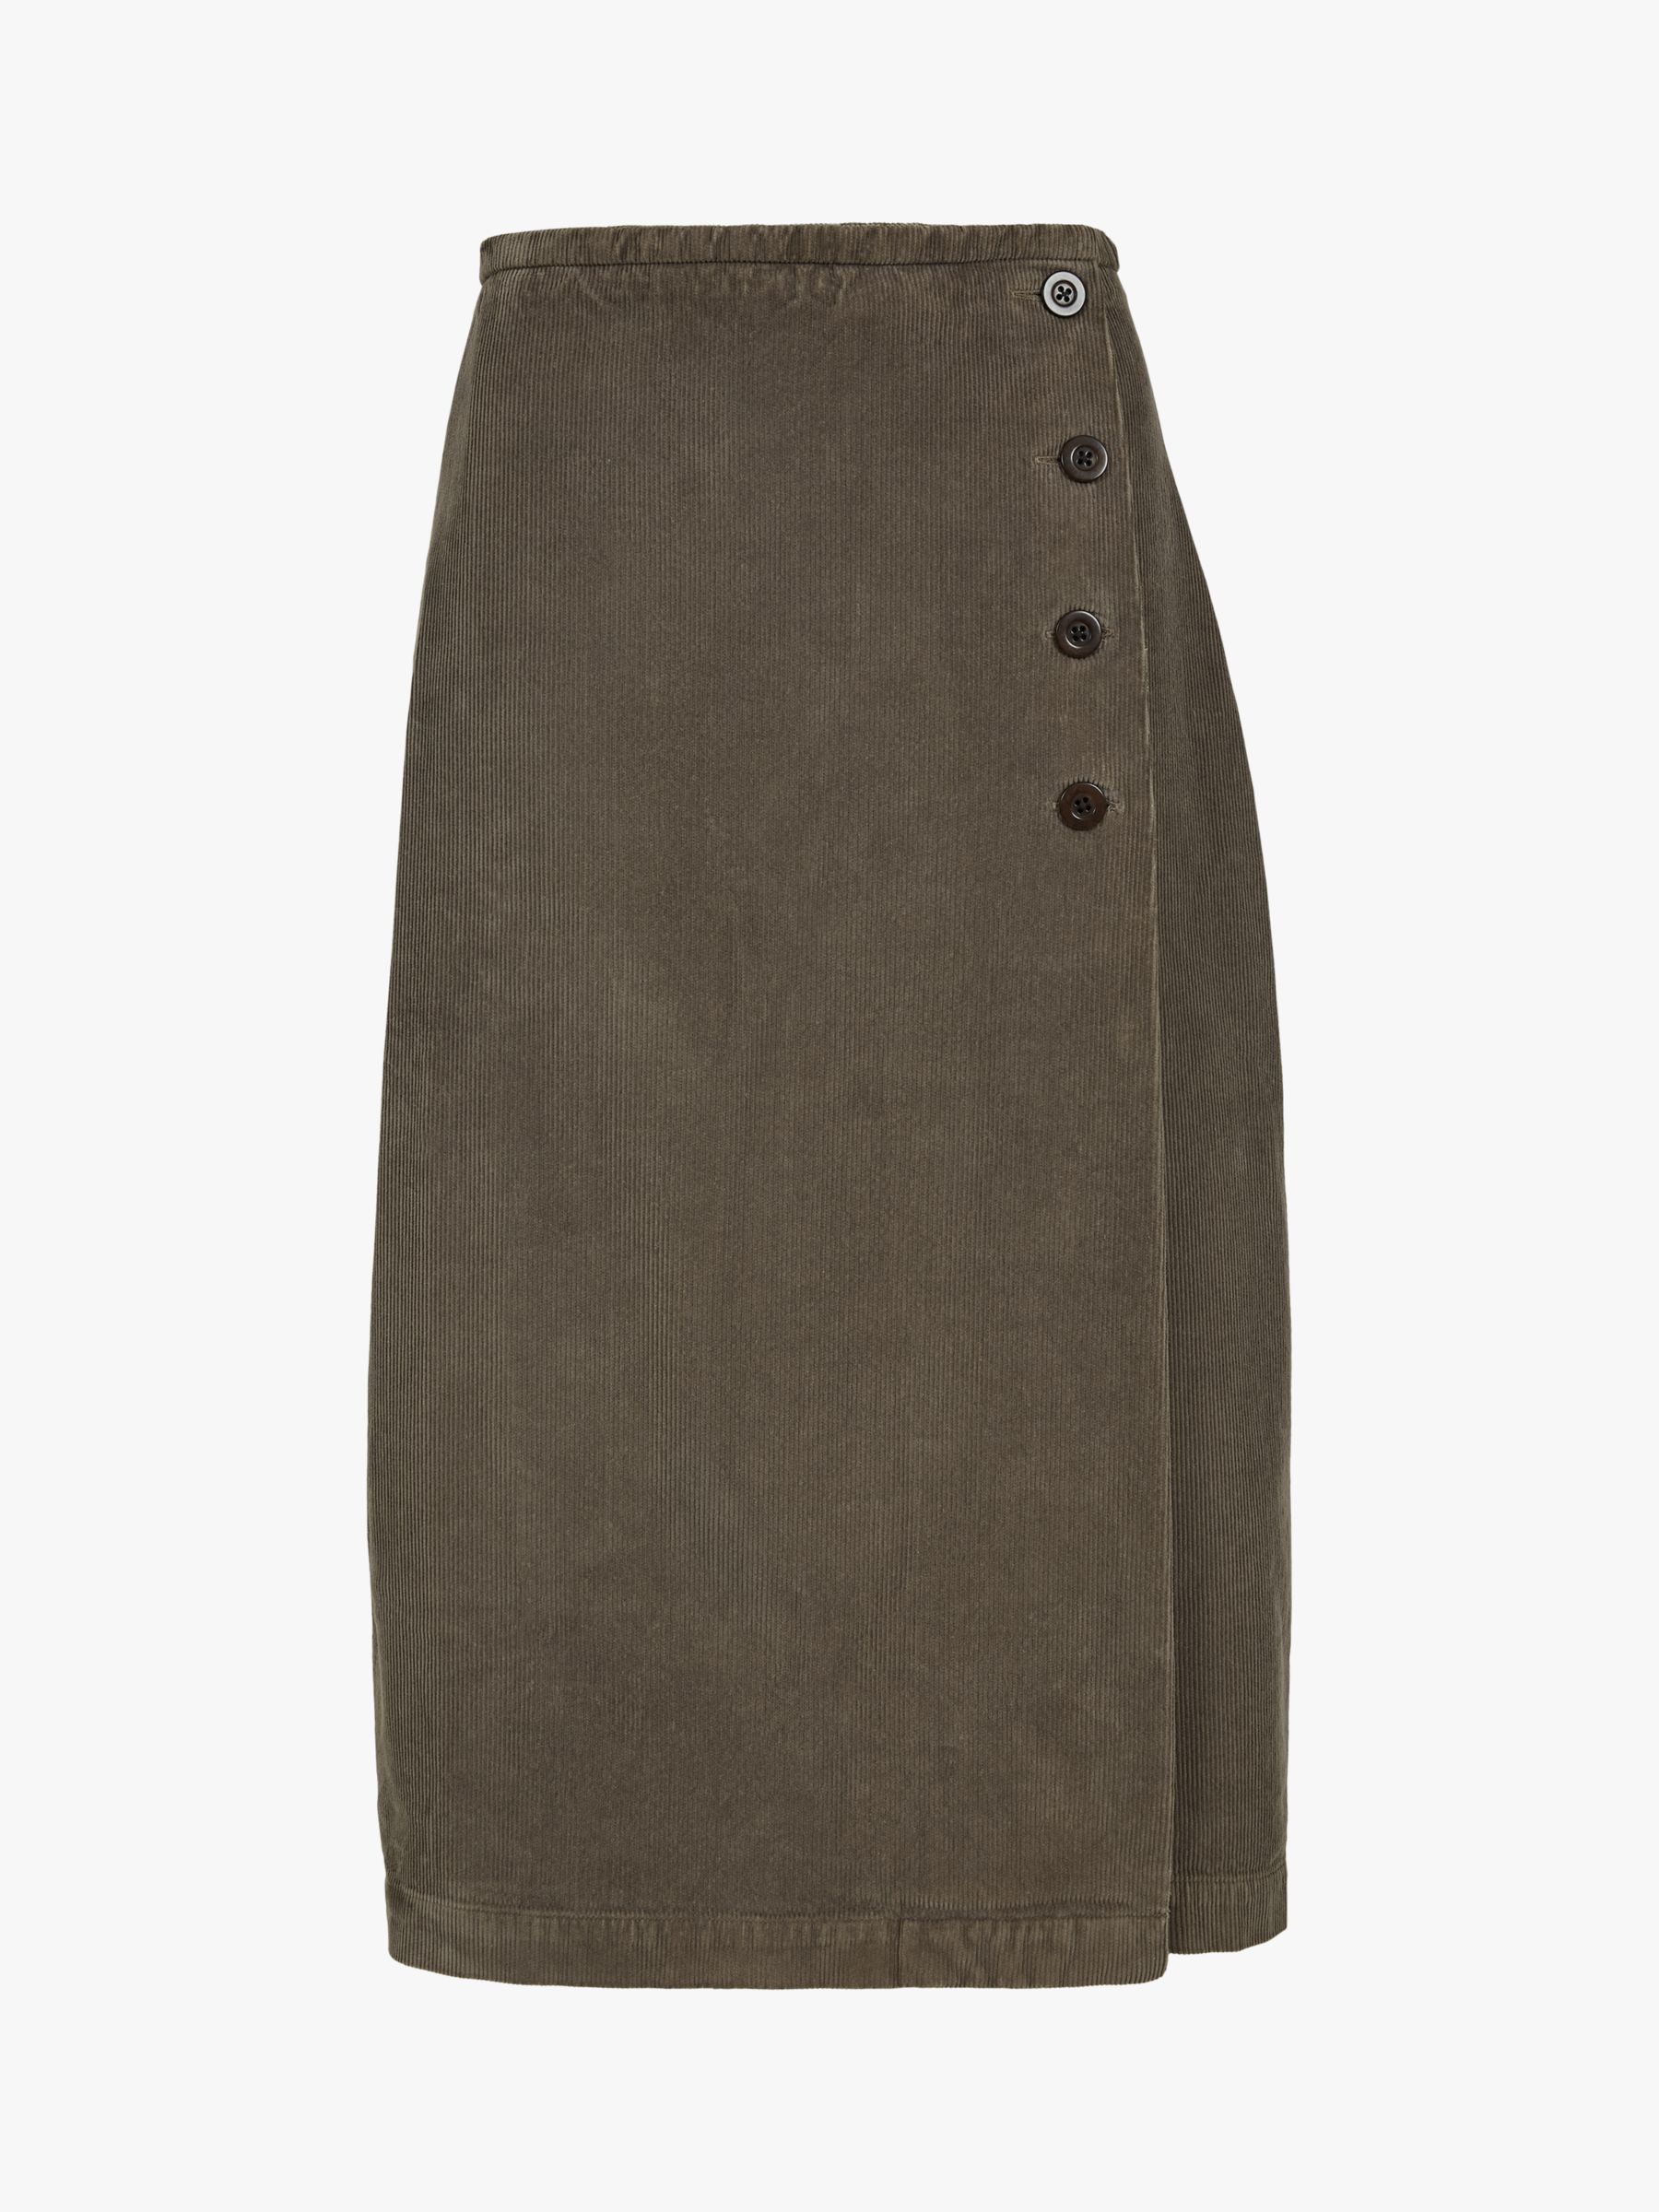 Buy Celtic & Co. Organic Cotton Corduroy Skirt, Mushroom Online at johnlewis.com